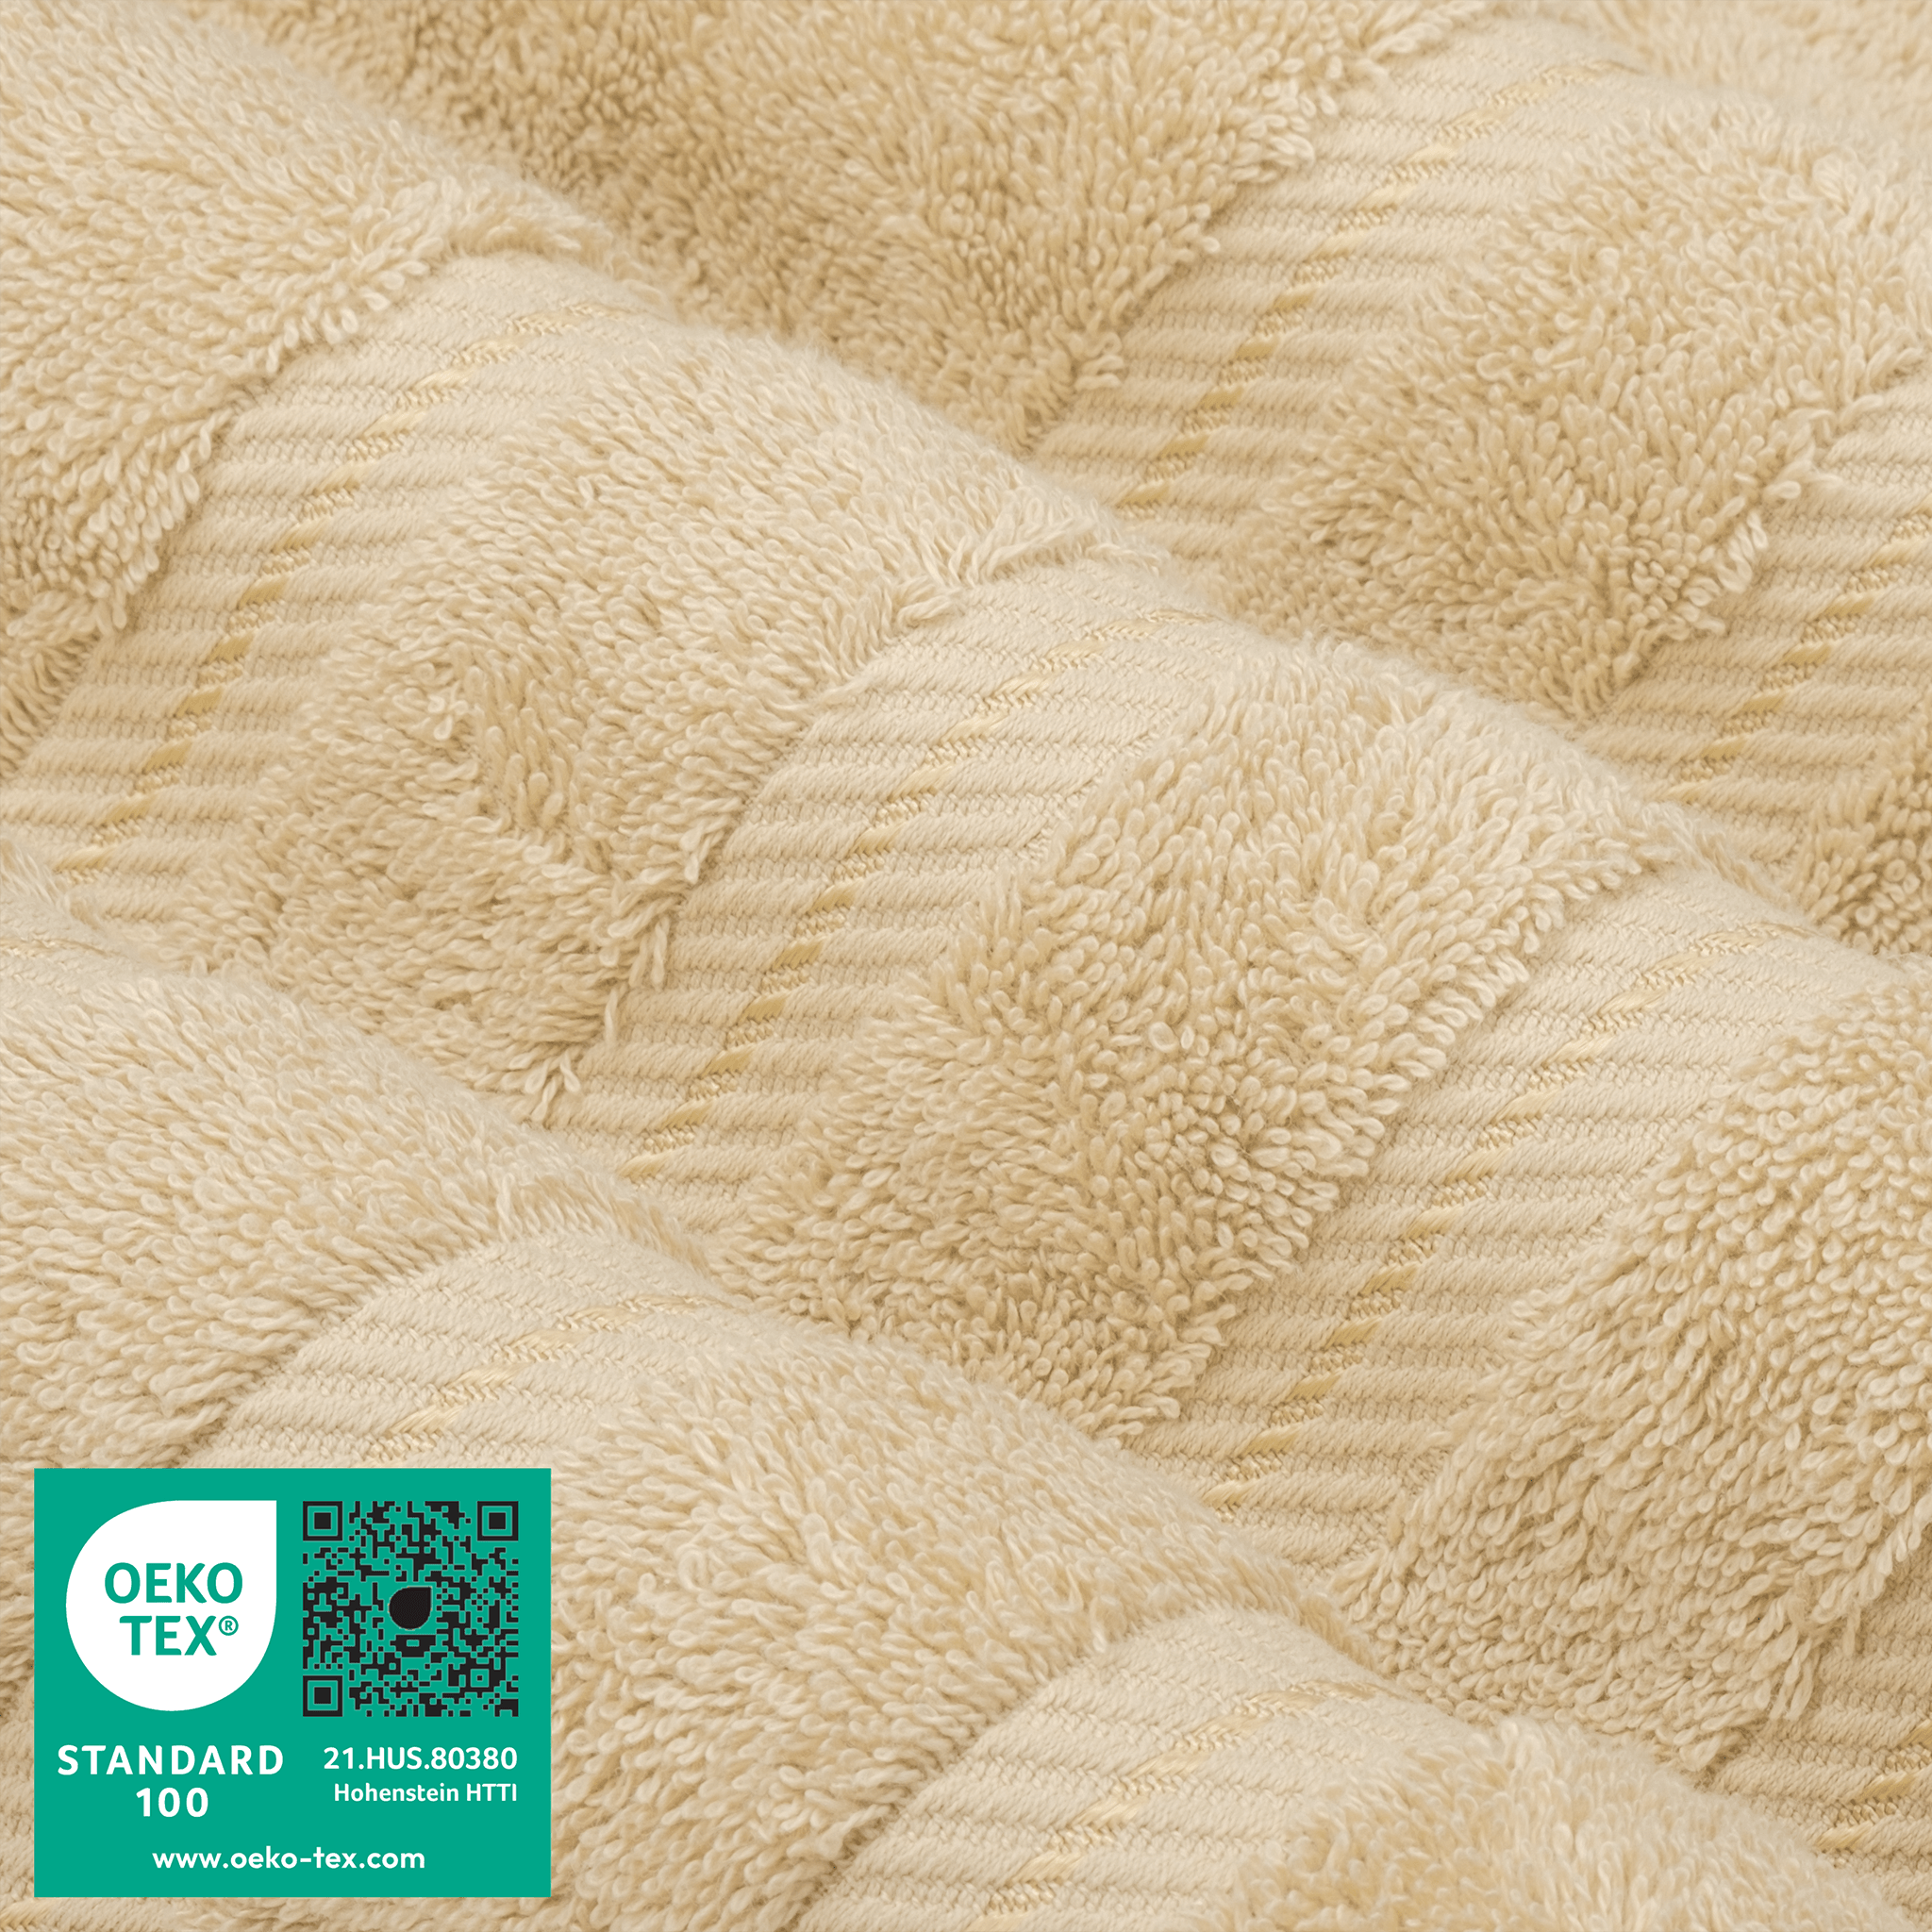 American Soft Linen - 3 Piece Turkish Cotton Towel Set - Sand-Taupe - 3